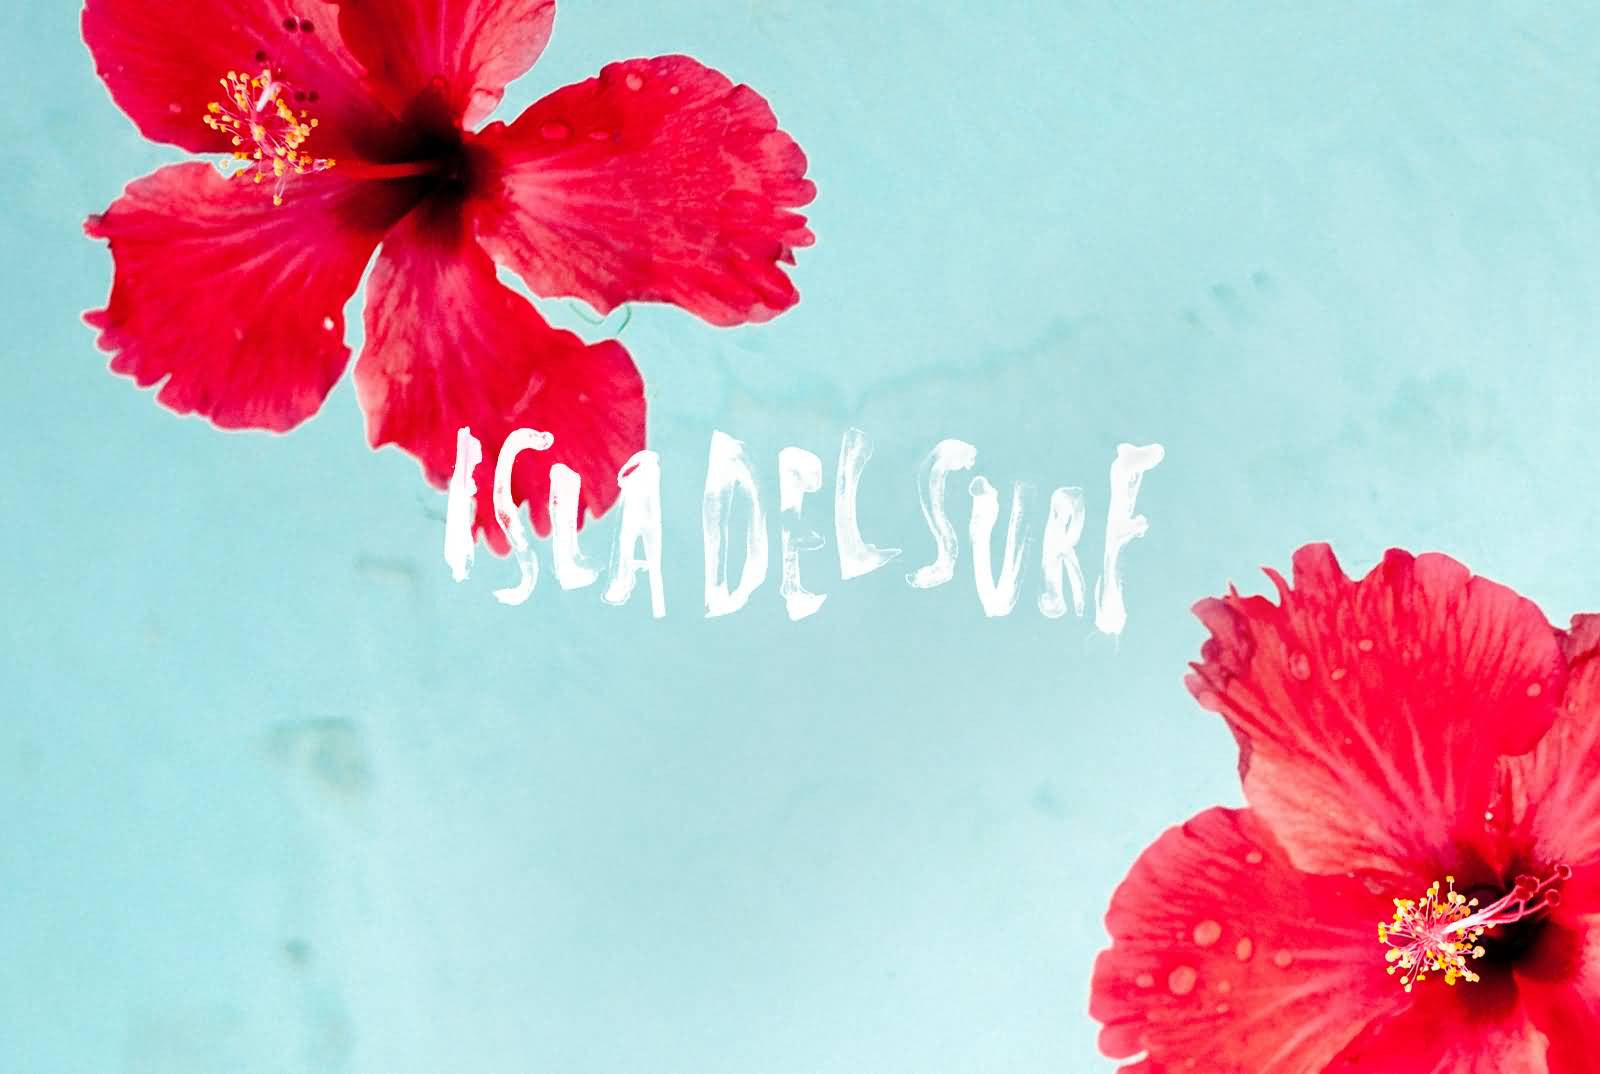 Billabong Summer 2017 | Isla Del Surf Womens Swimwear Collection|Billabong Summer 2017 | Isla Del Surf Womens Swimwear Collection